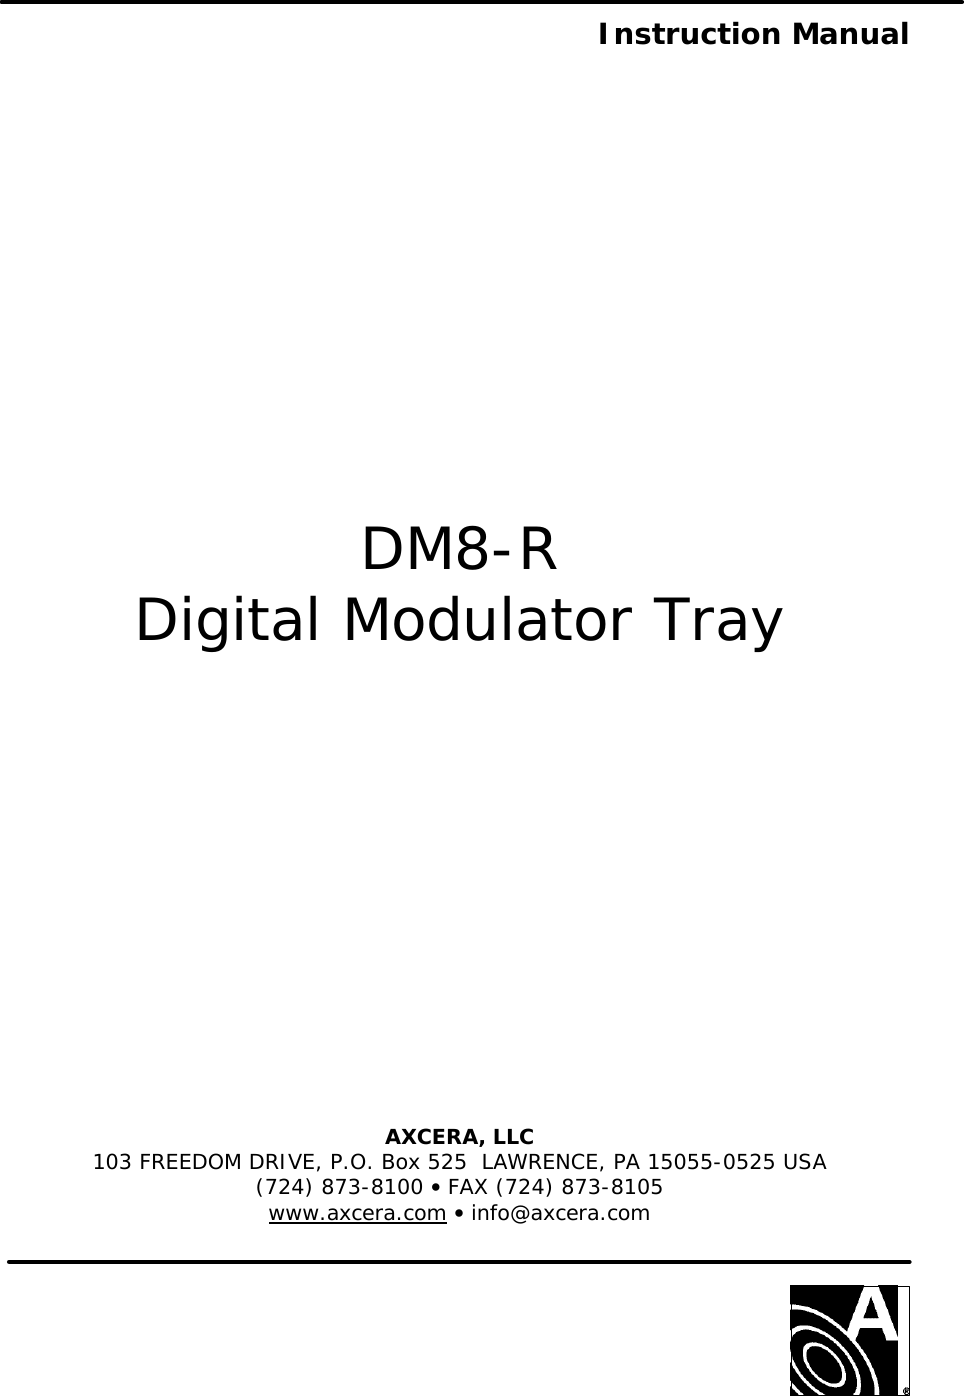    Instruction Manual                 DM8-R Digital Modulator Tray                AXCERA, LLC  103 FREEDOM DRIVE, P.O. Box 525  LAWRENCE, PA 15055-0525 USA (724) 873-8100 • FAX (724) 873-8105 www.axcera.com • info@axcera.com     